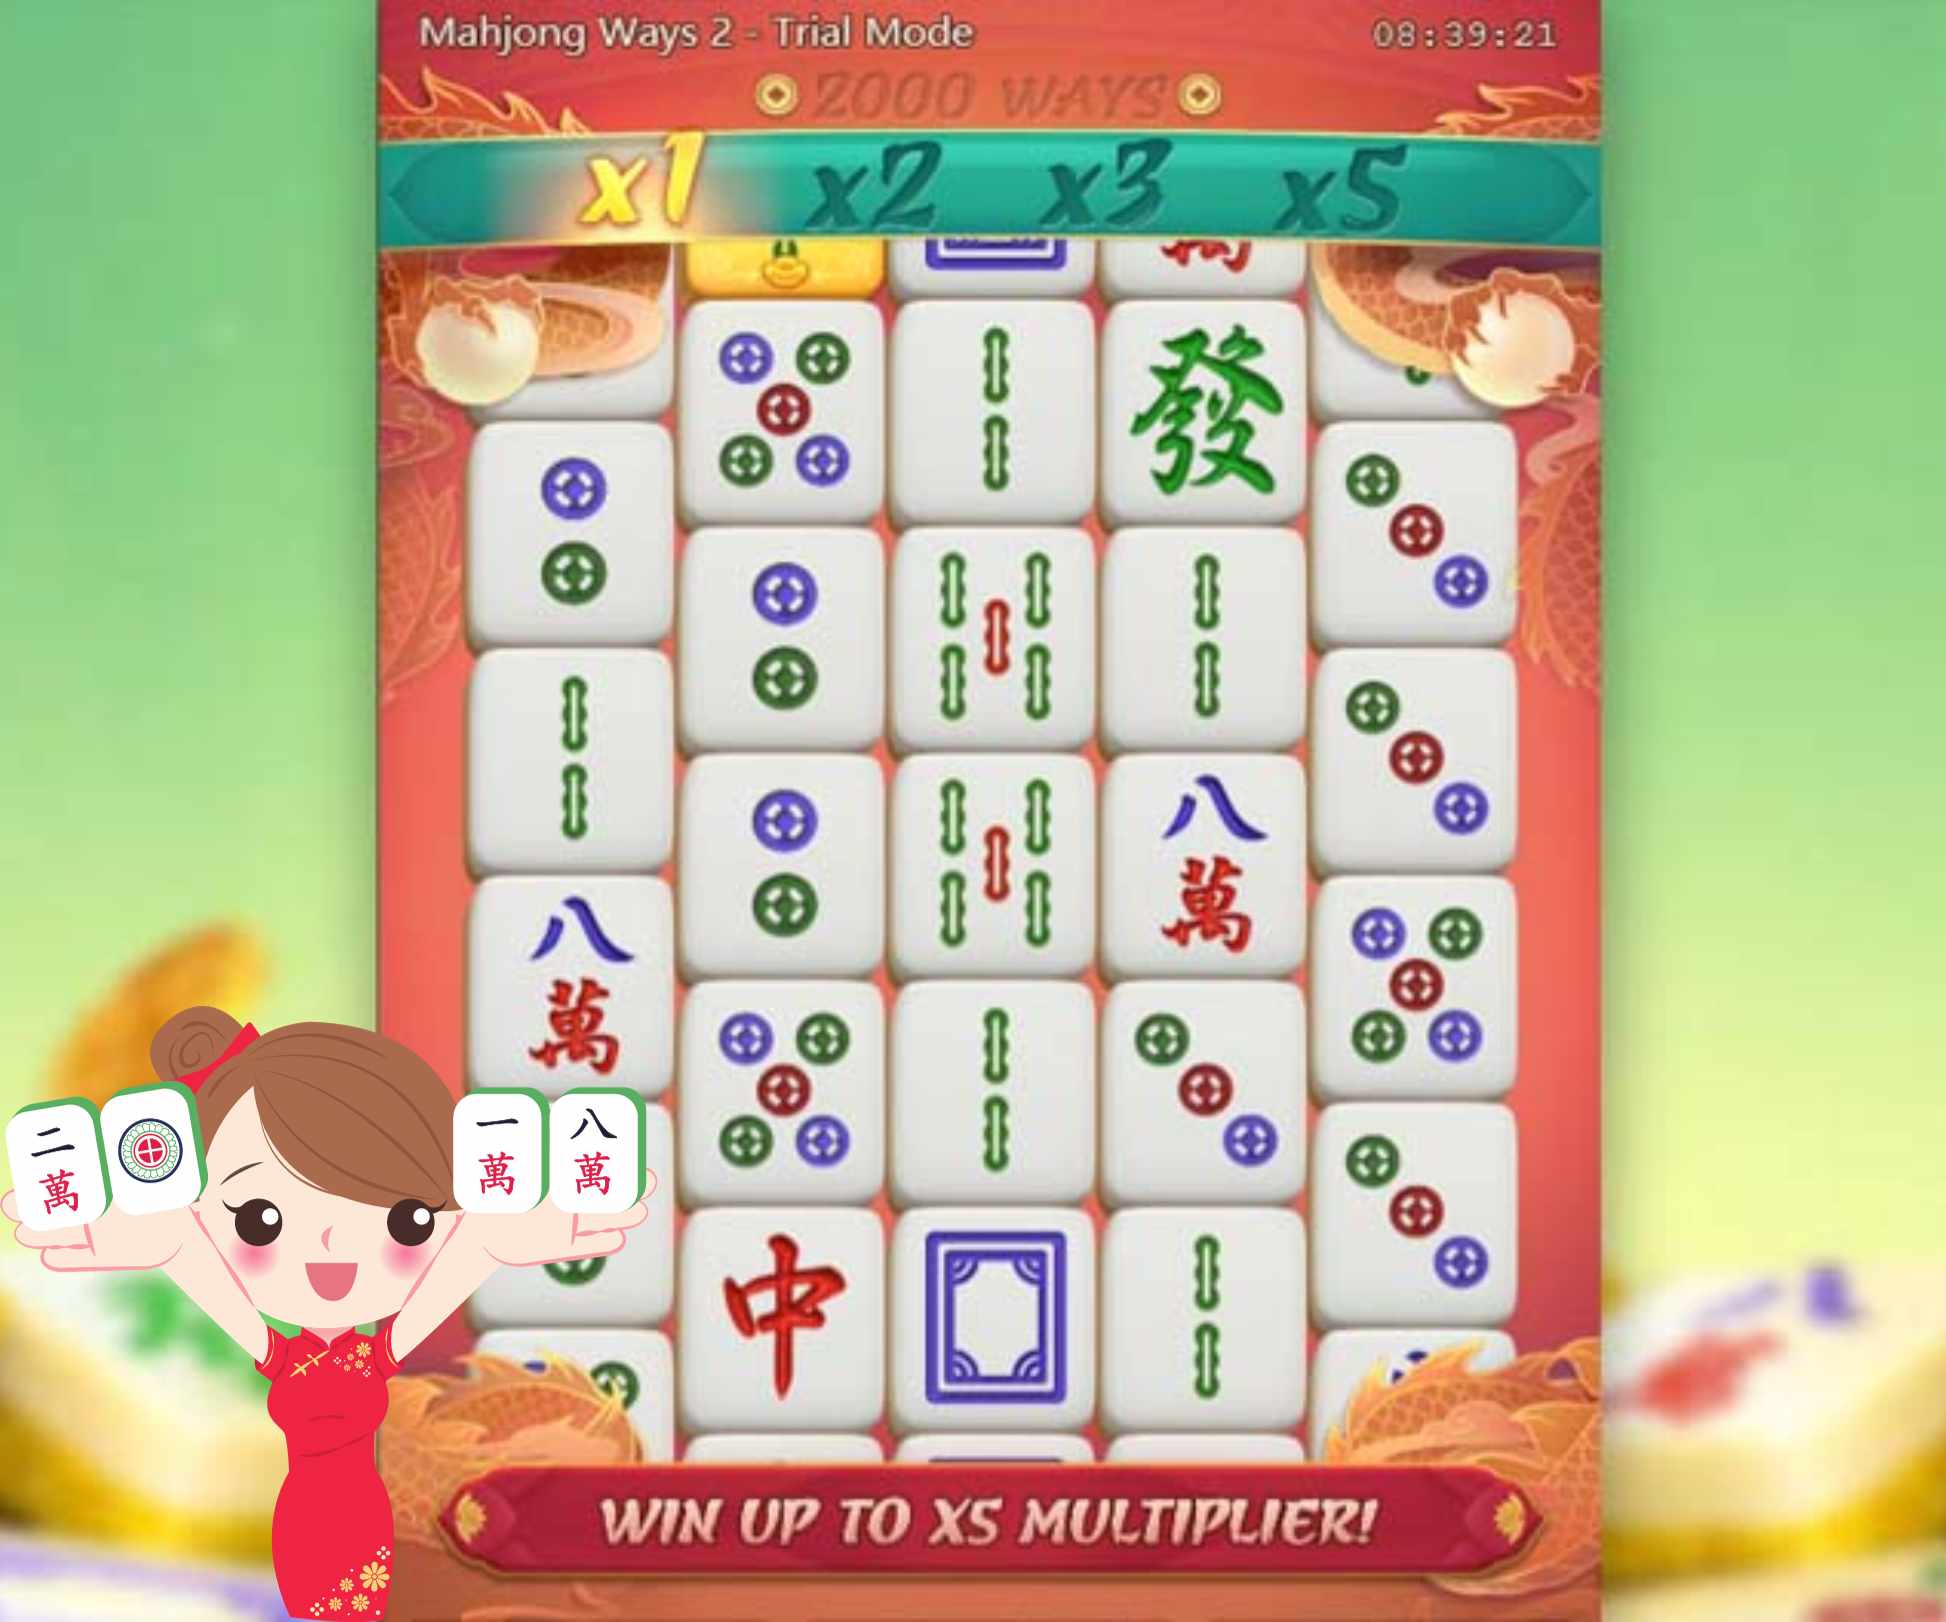 Mahjong slot a unique slot game like no other